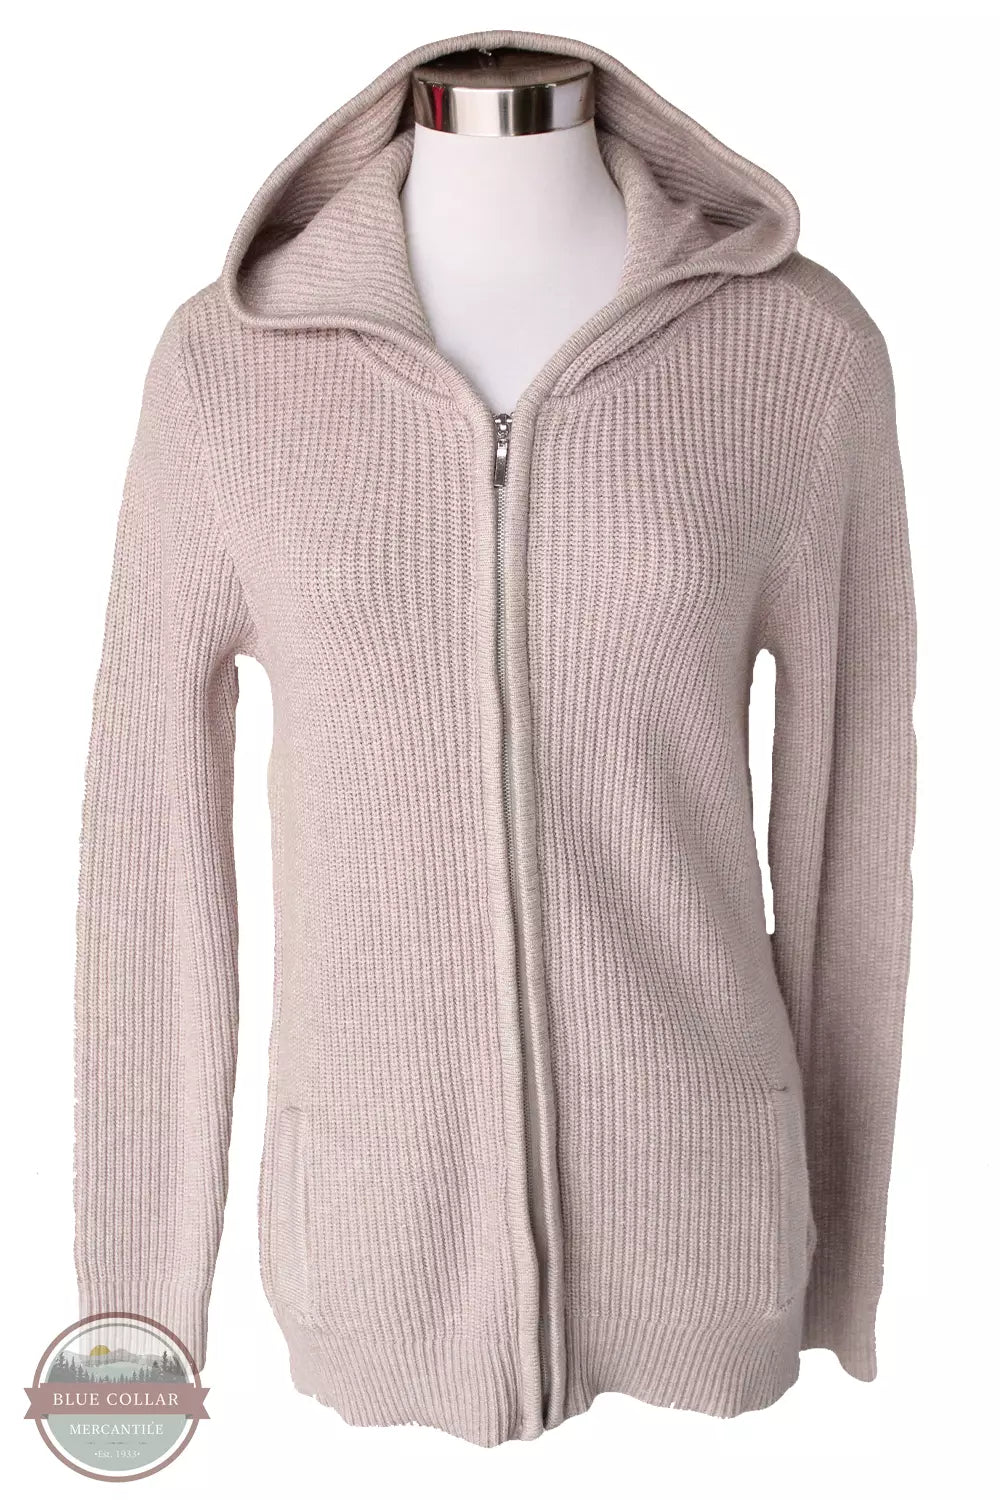 Keren Hart 35008 Full Zip Hooded Sweater Khaki Front View